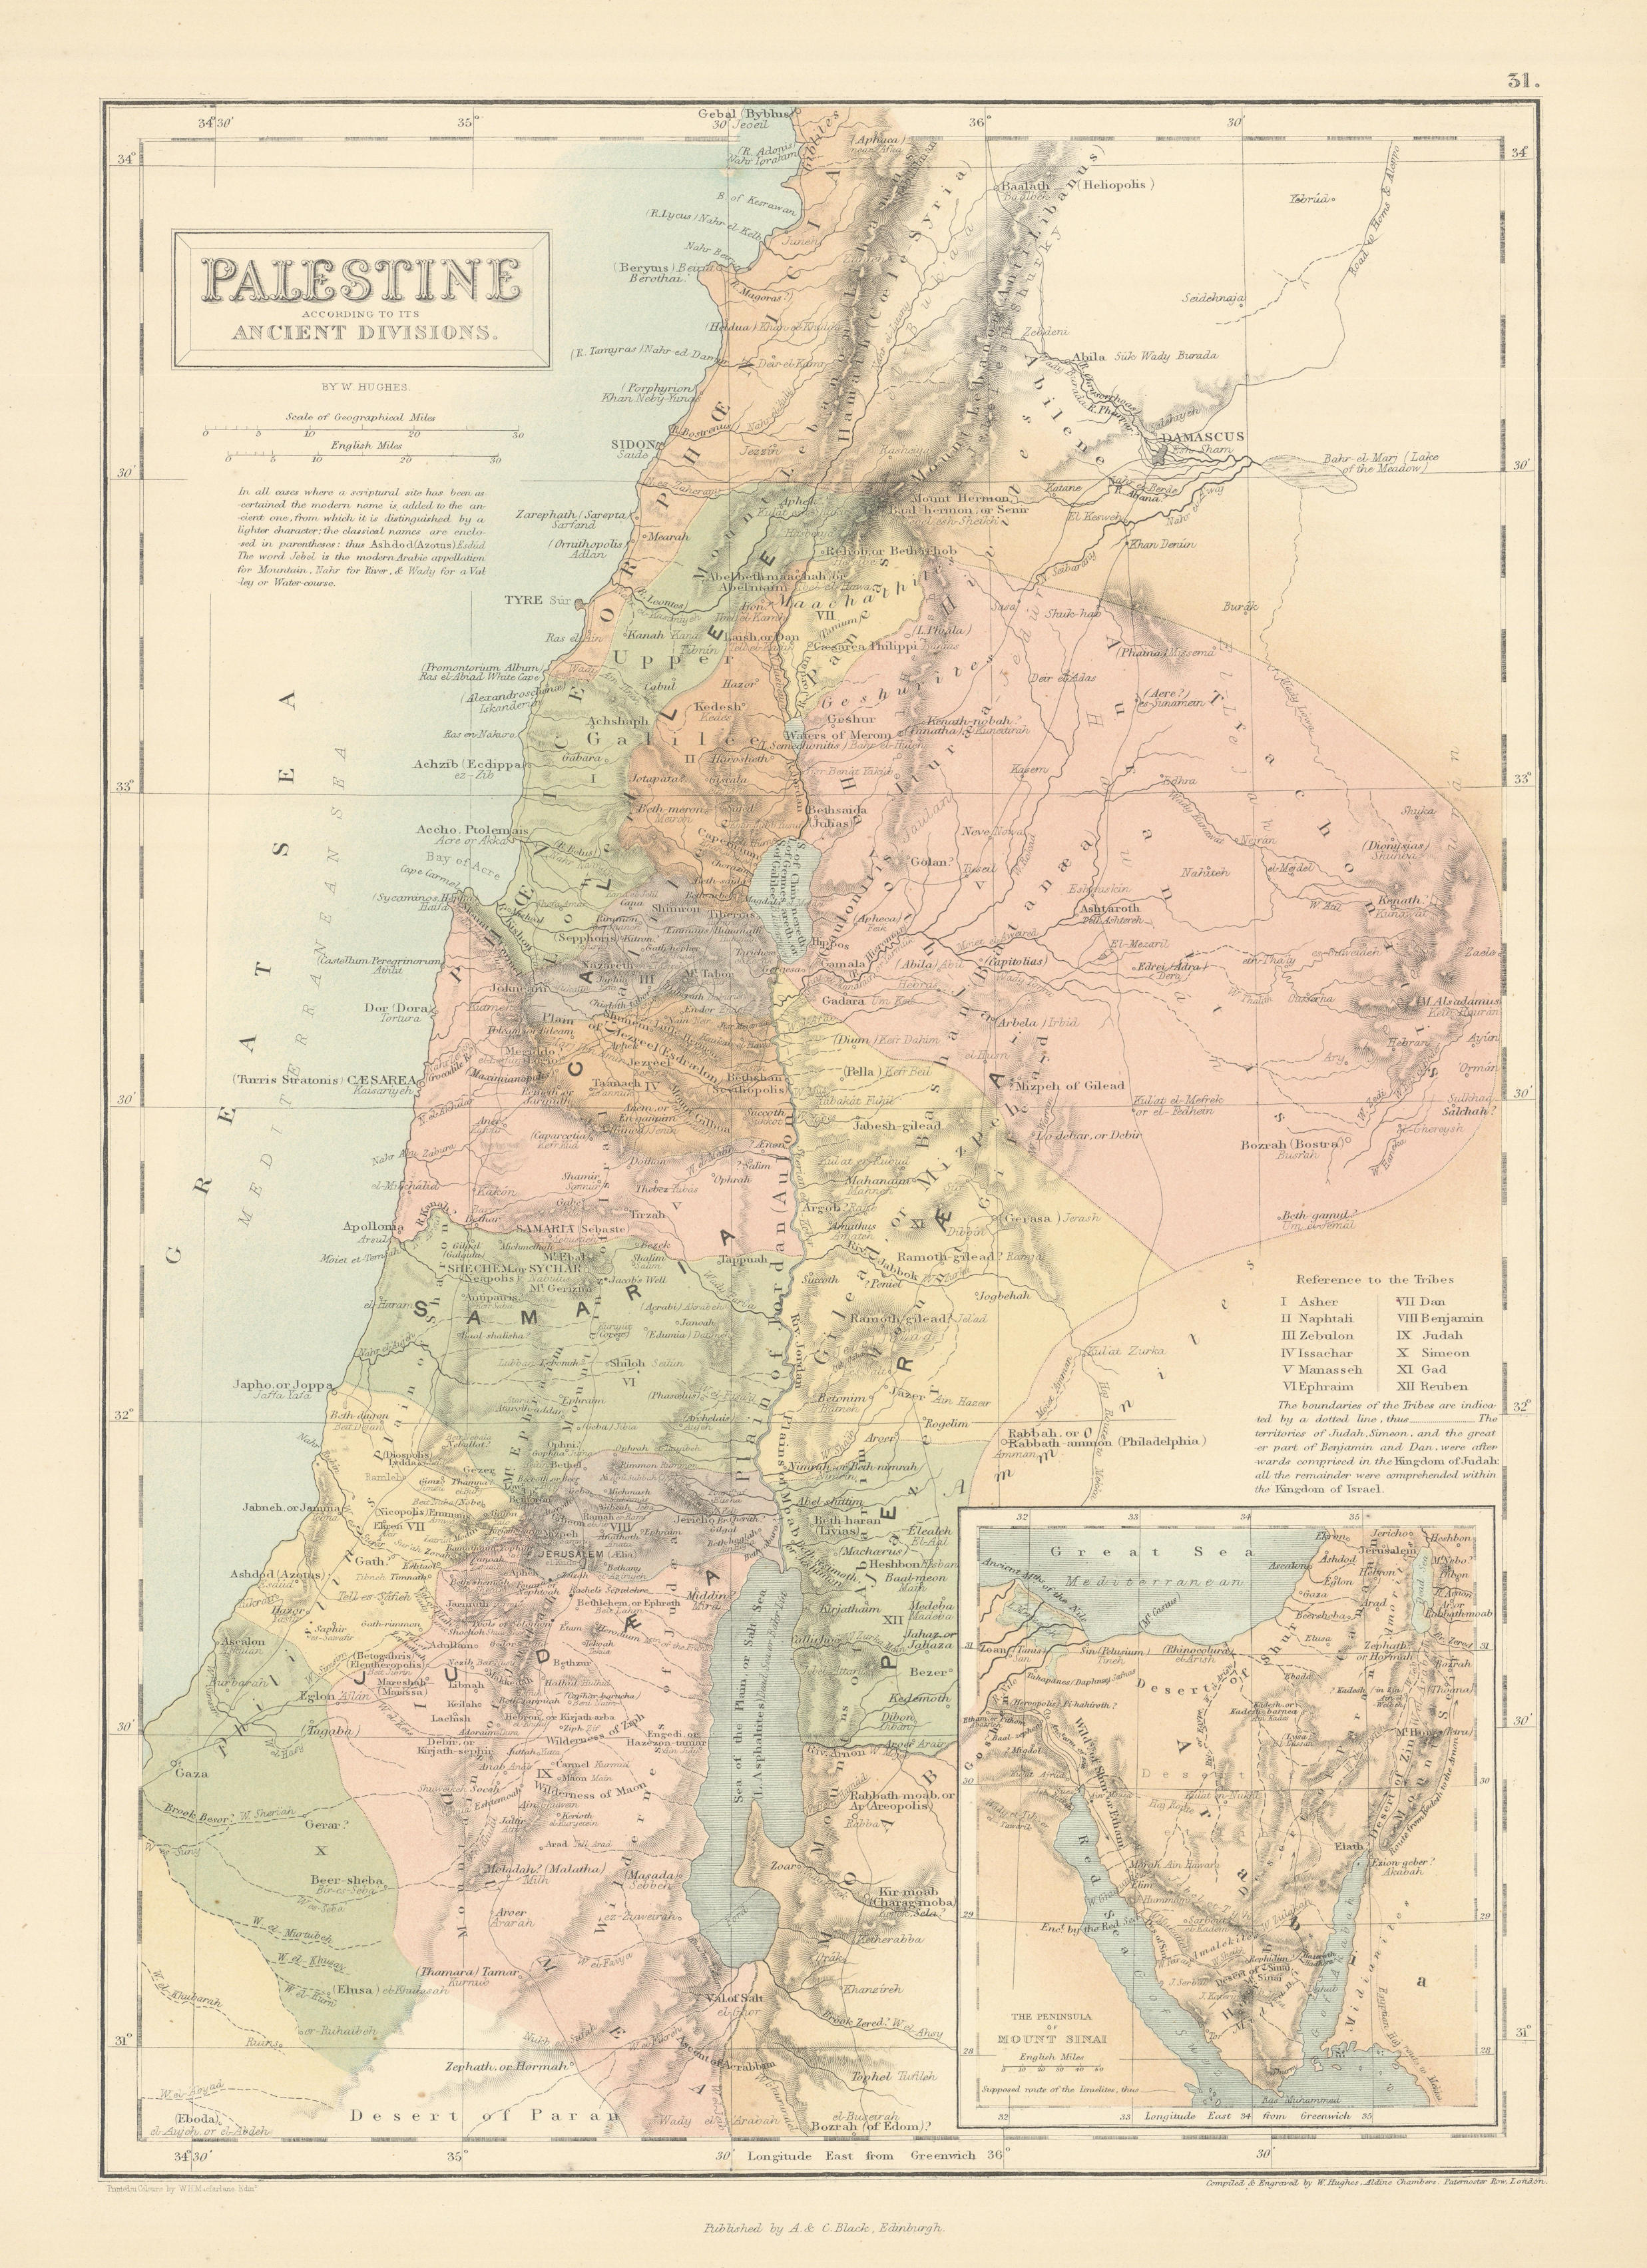 Palestine with its ancient divisions. Inset Sinai peninsula. HUGHES 1862 map